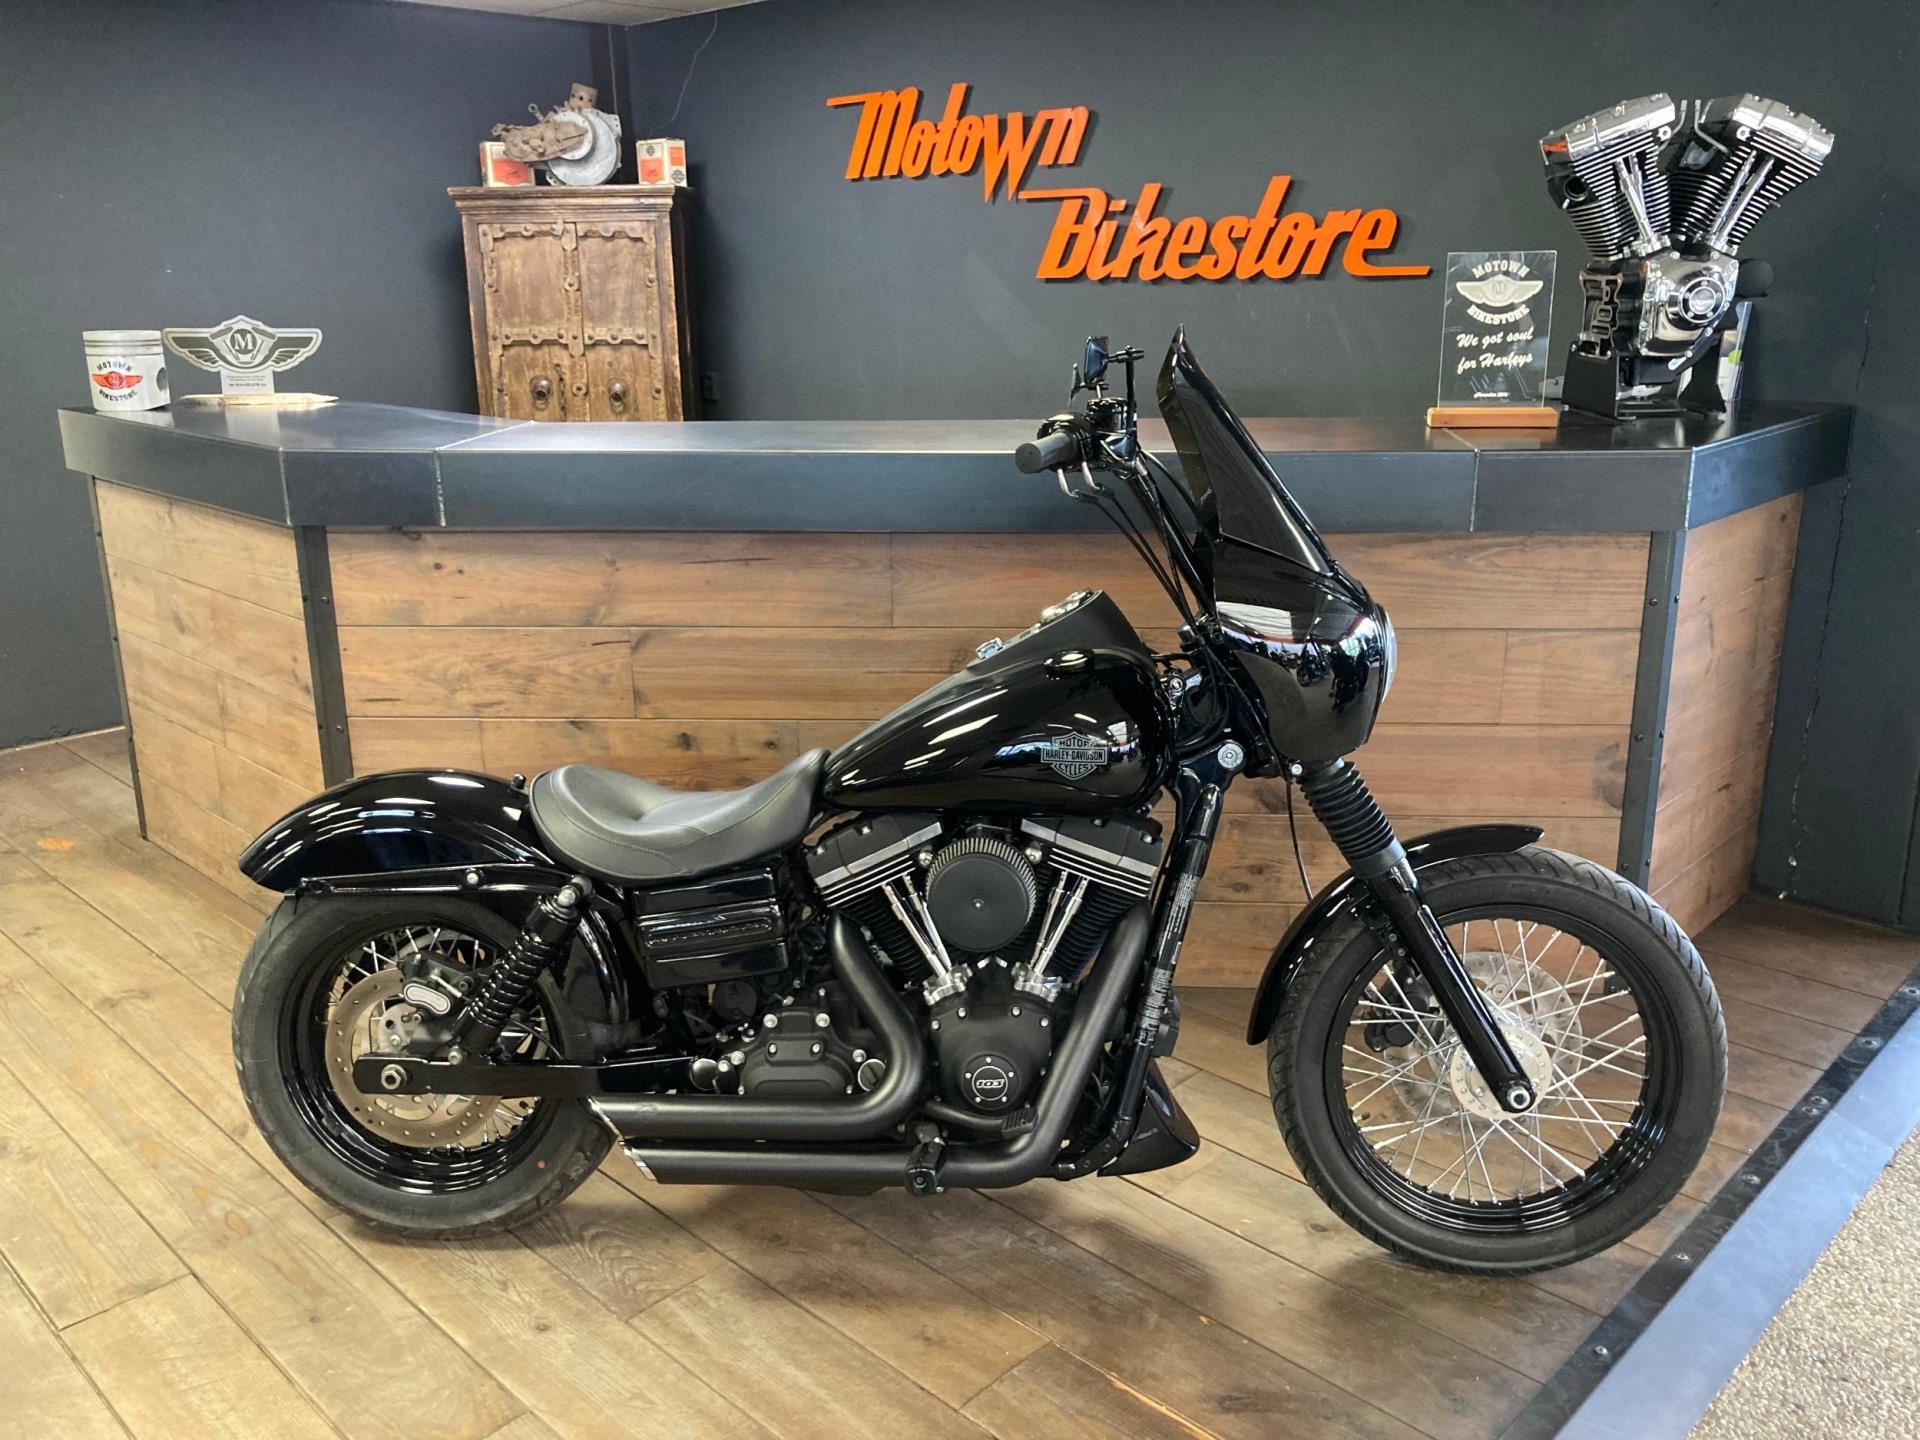 Harley Davidson FXDB 103 Dyna Streetbob occasion - Motown Bikestore